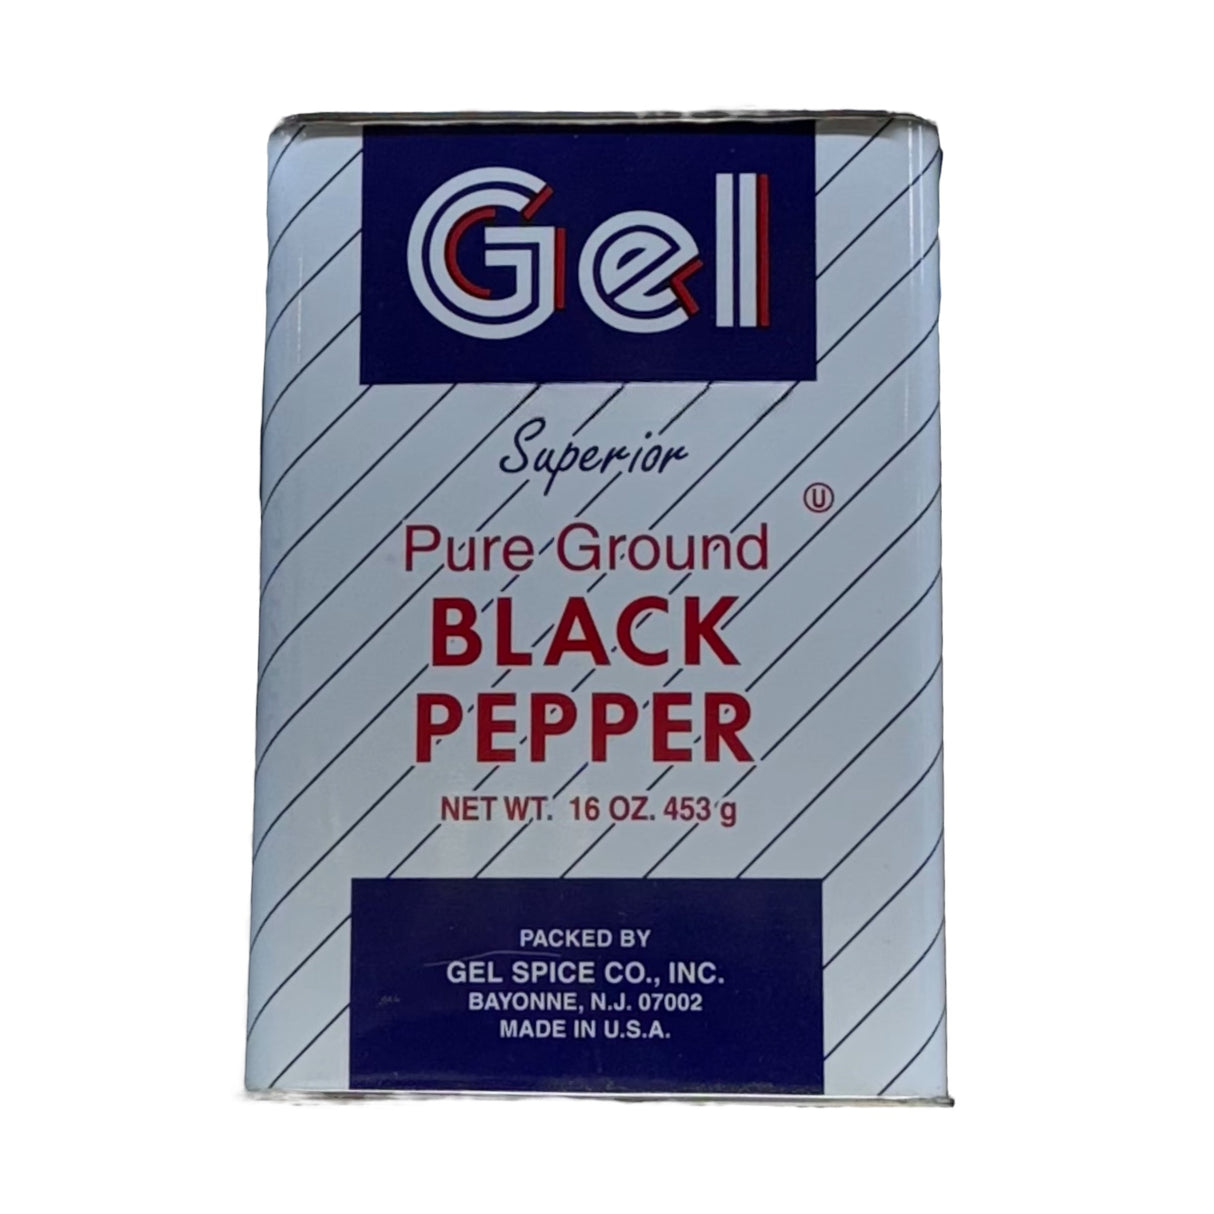 Gel Pure Ground Black Pepper